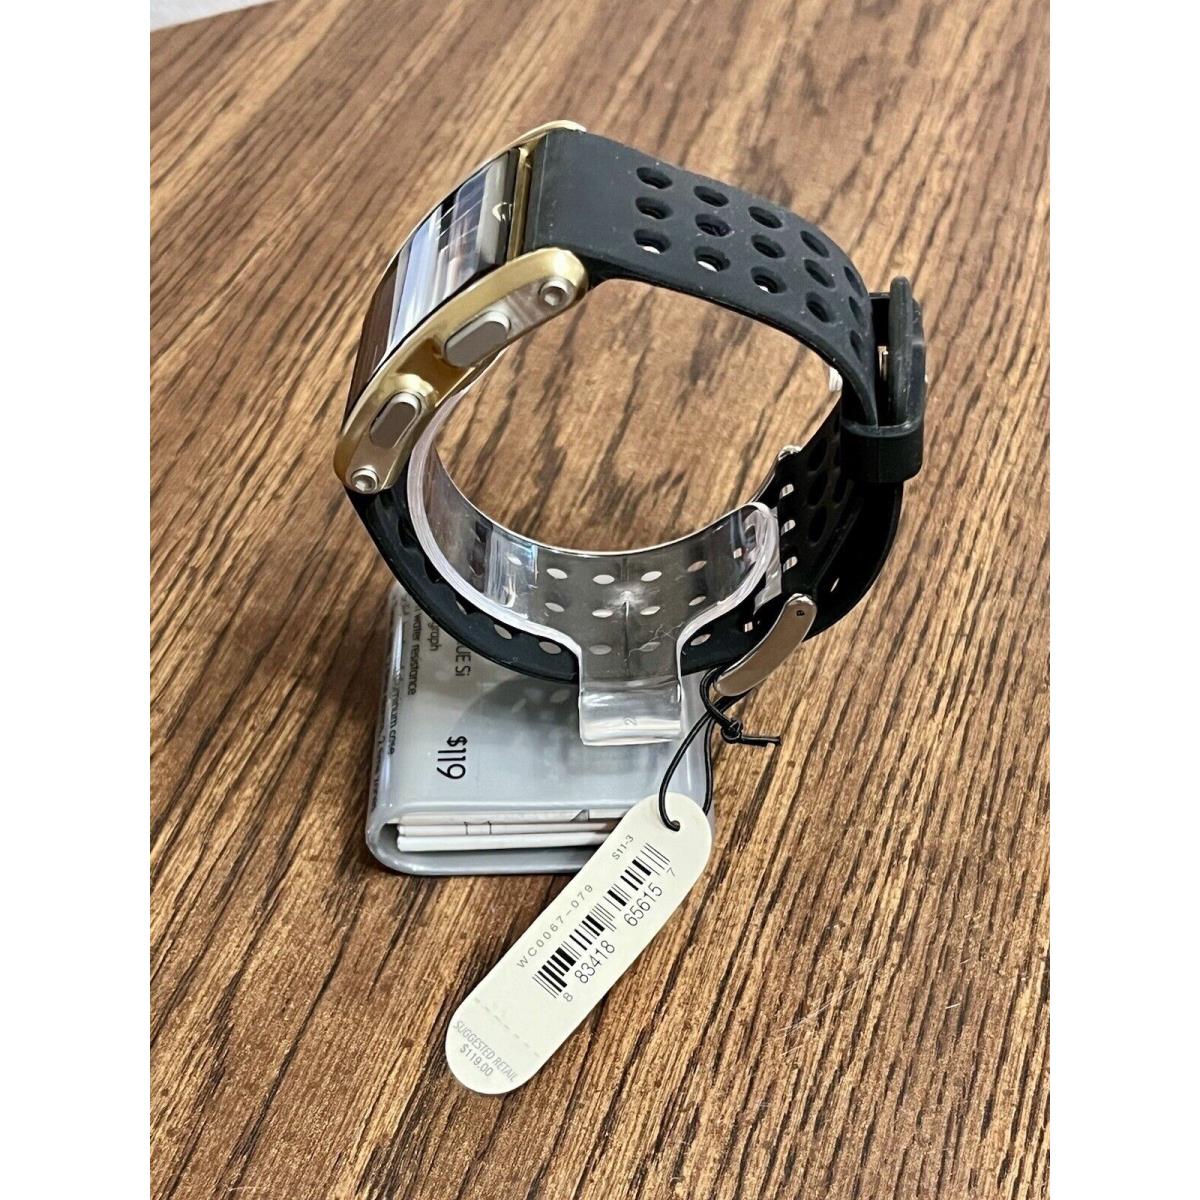 Nike Torque WC0067-079 Digital Watch Black/gold Needs Battery